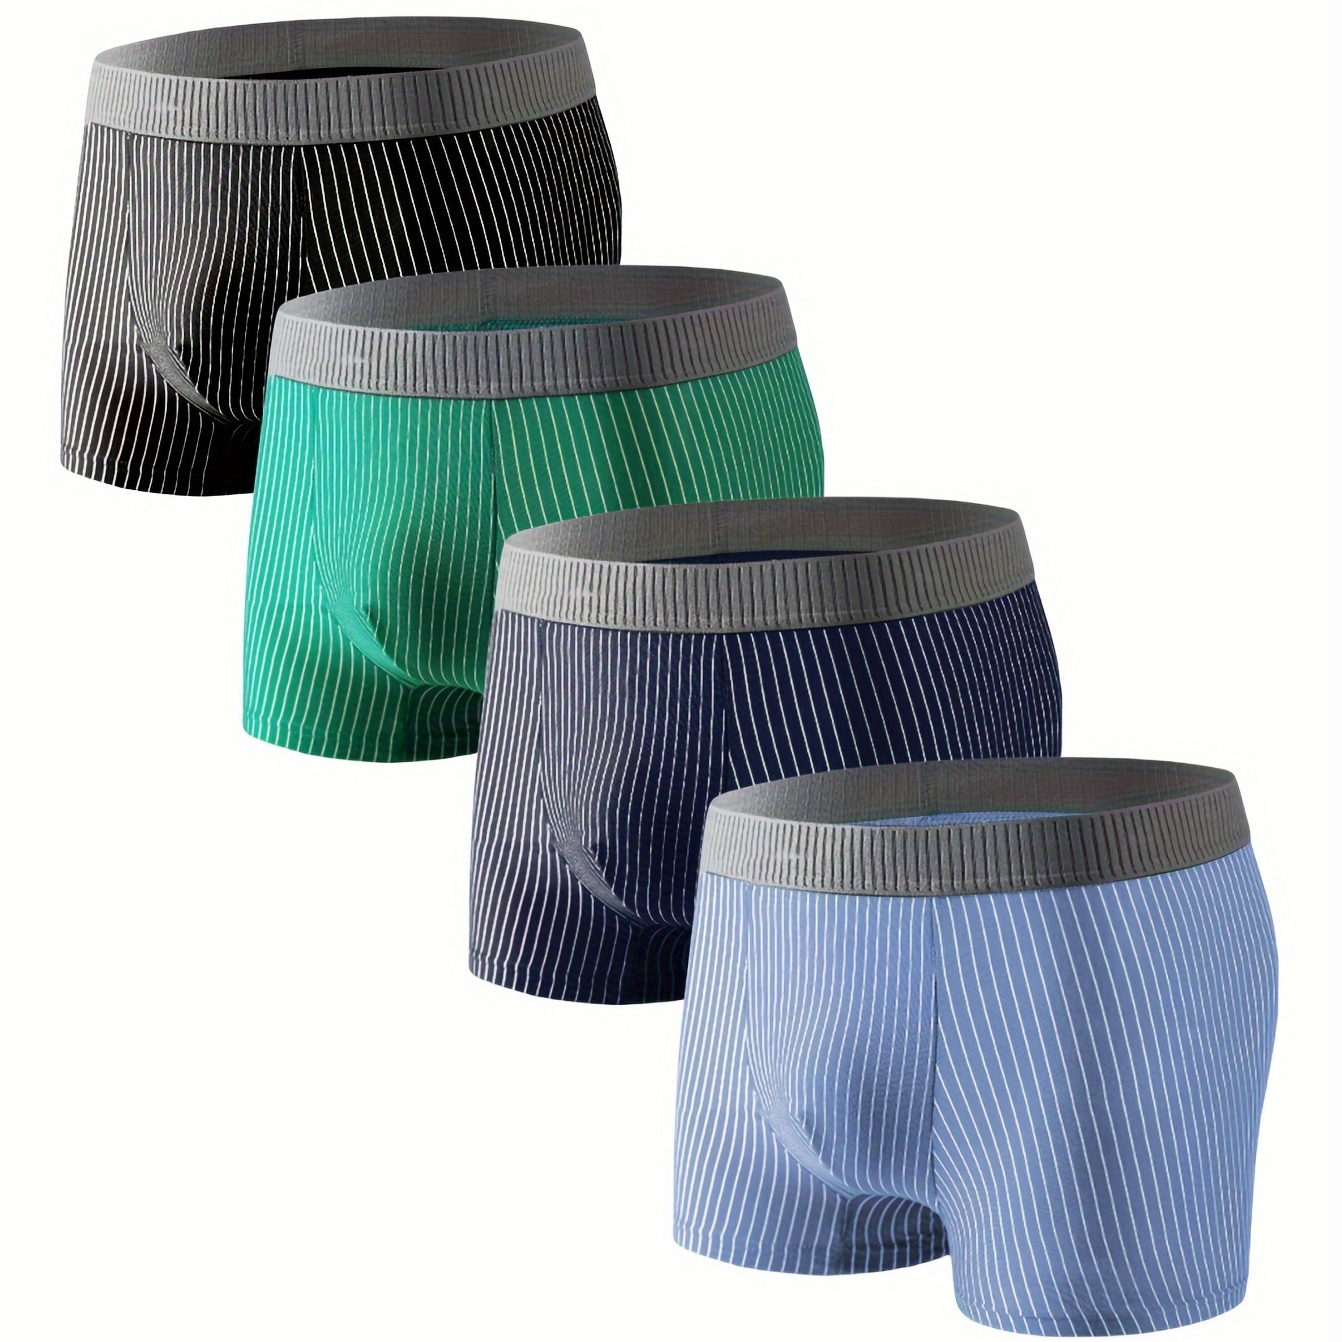 

4pcs Men's Cotton Striped Boxer Briefs, Breathable Comfy Boxer Trunks, Elastic Sports Shorts, Men's Casual & Durable Underwear Perfect For Sports & Home Wear